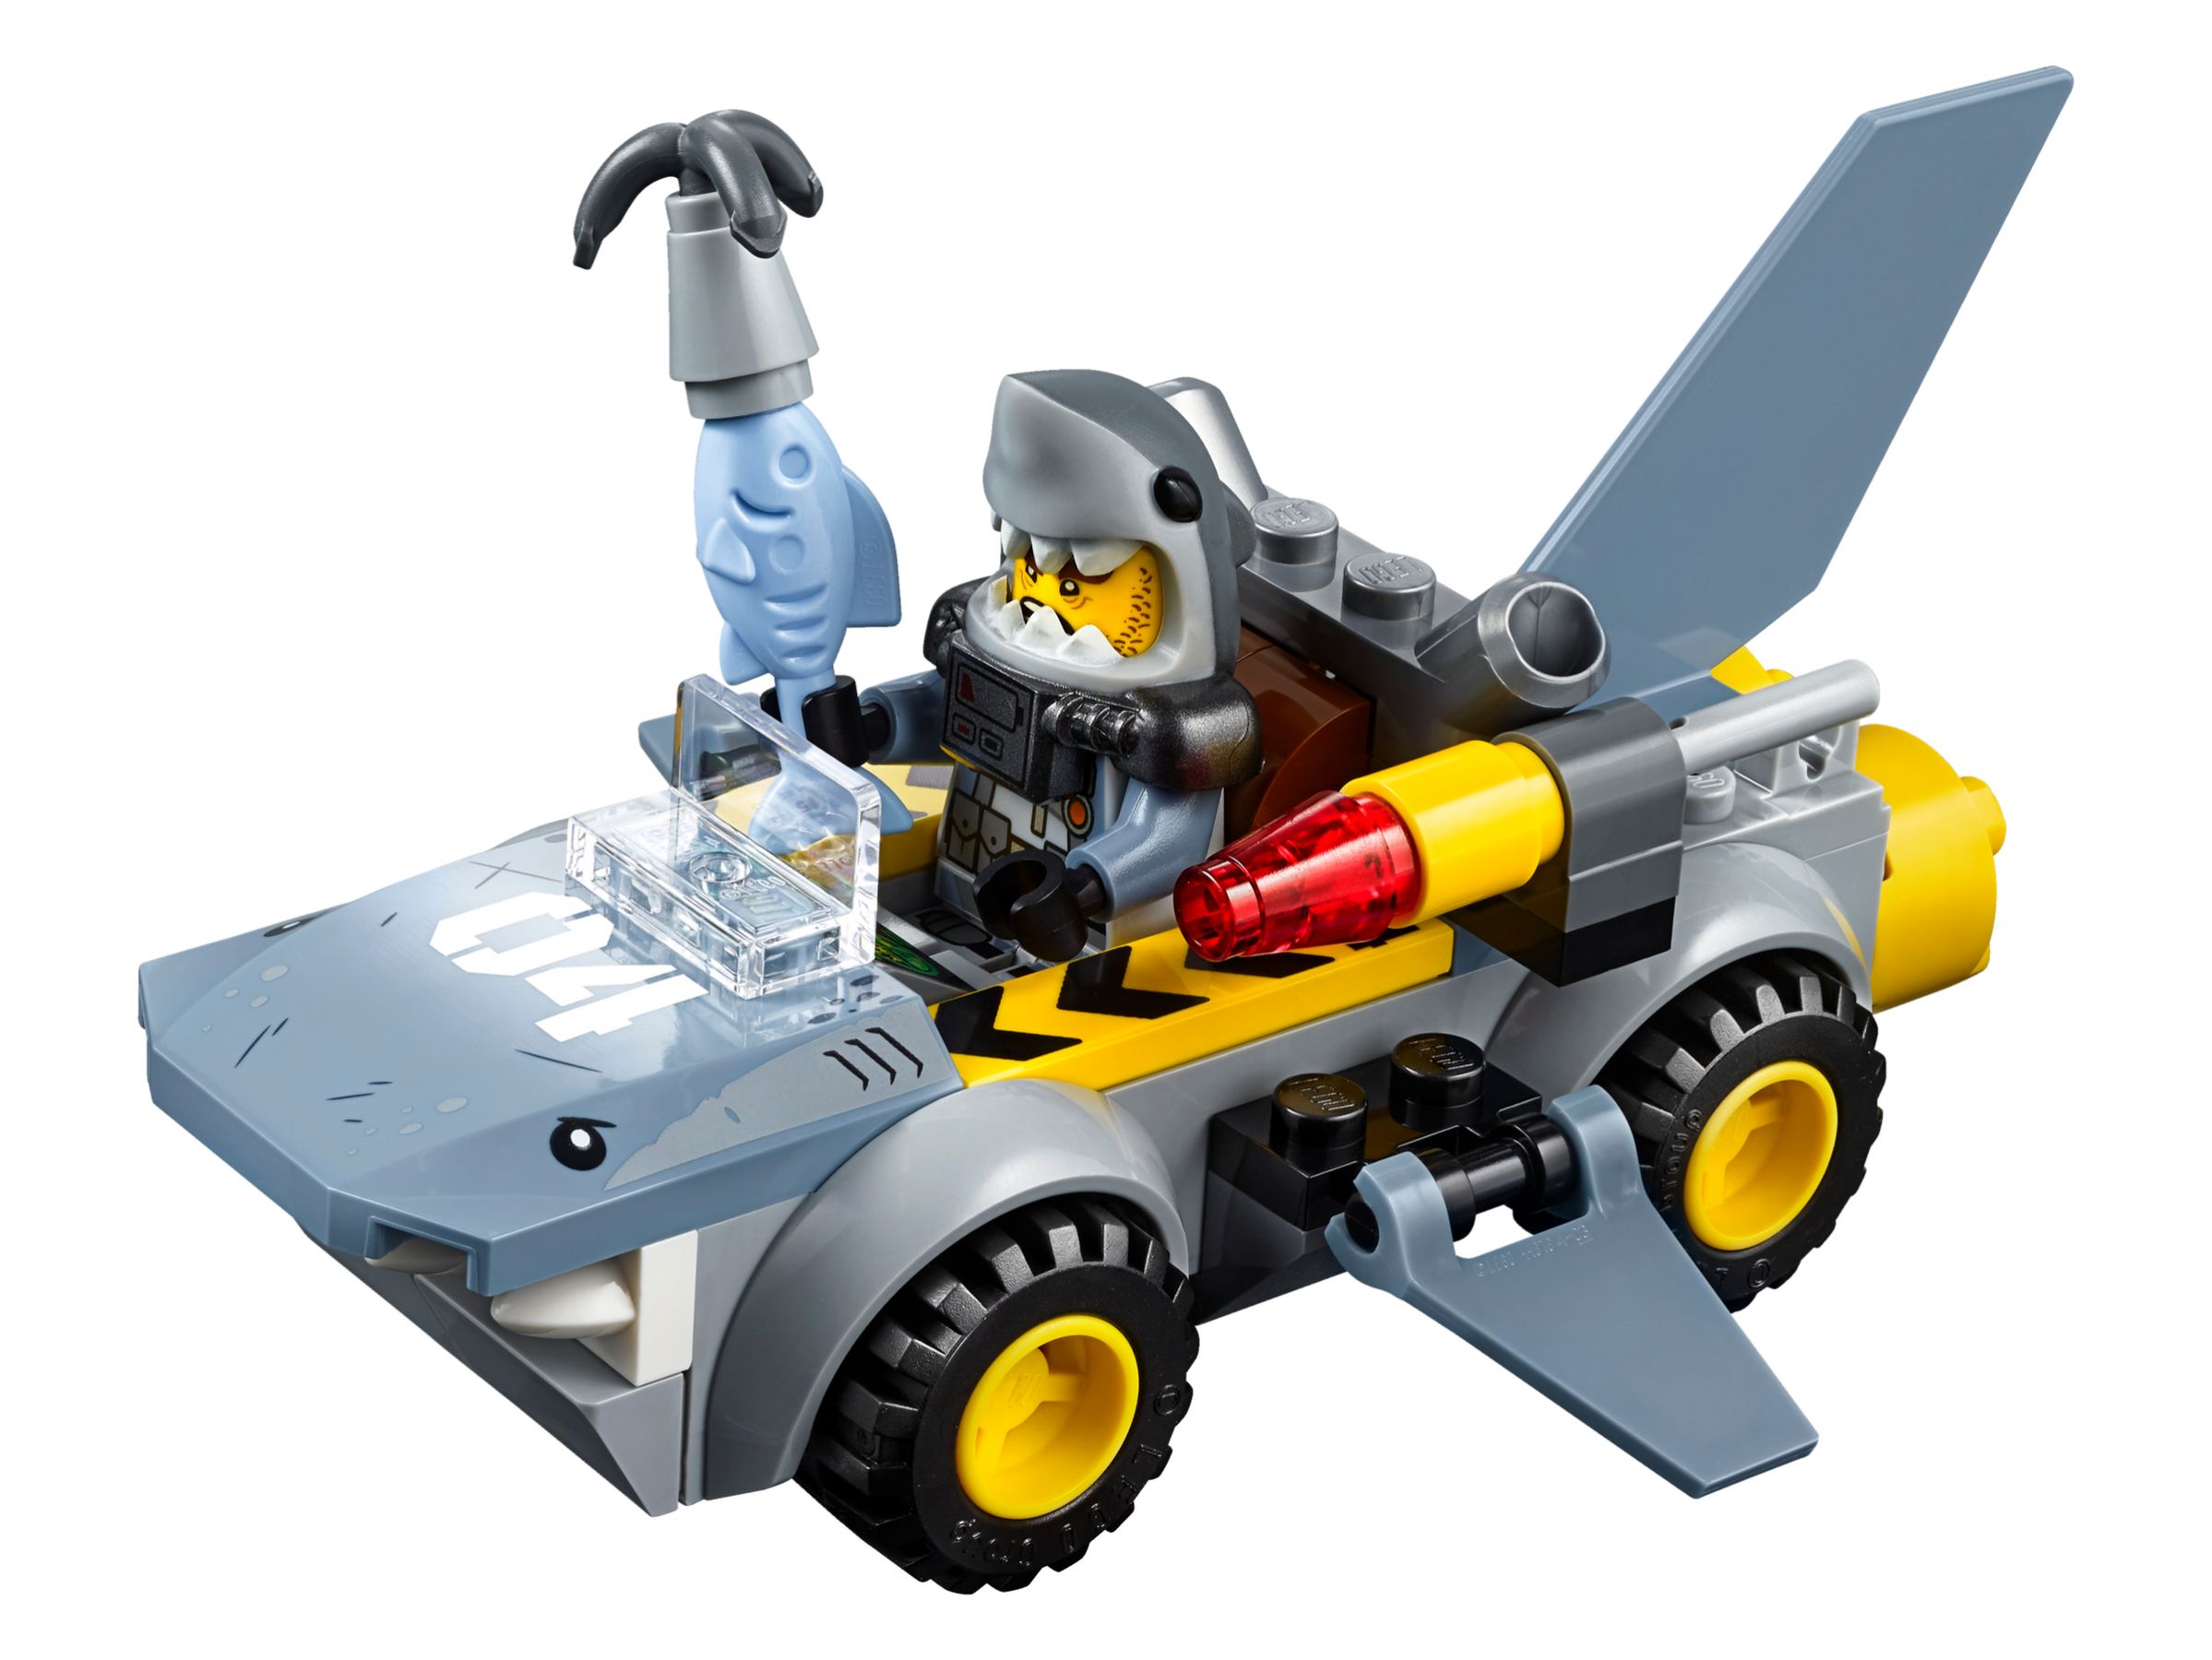 LEGO Juniors 10739 Haiangriff LEGO_10739_alt2.jpg